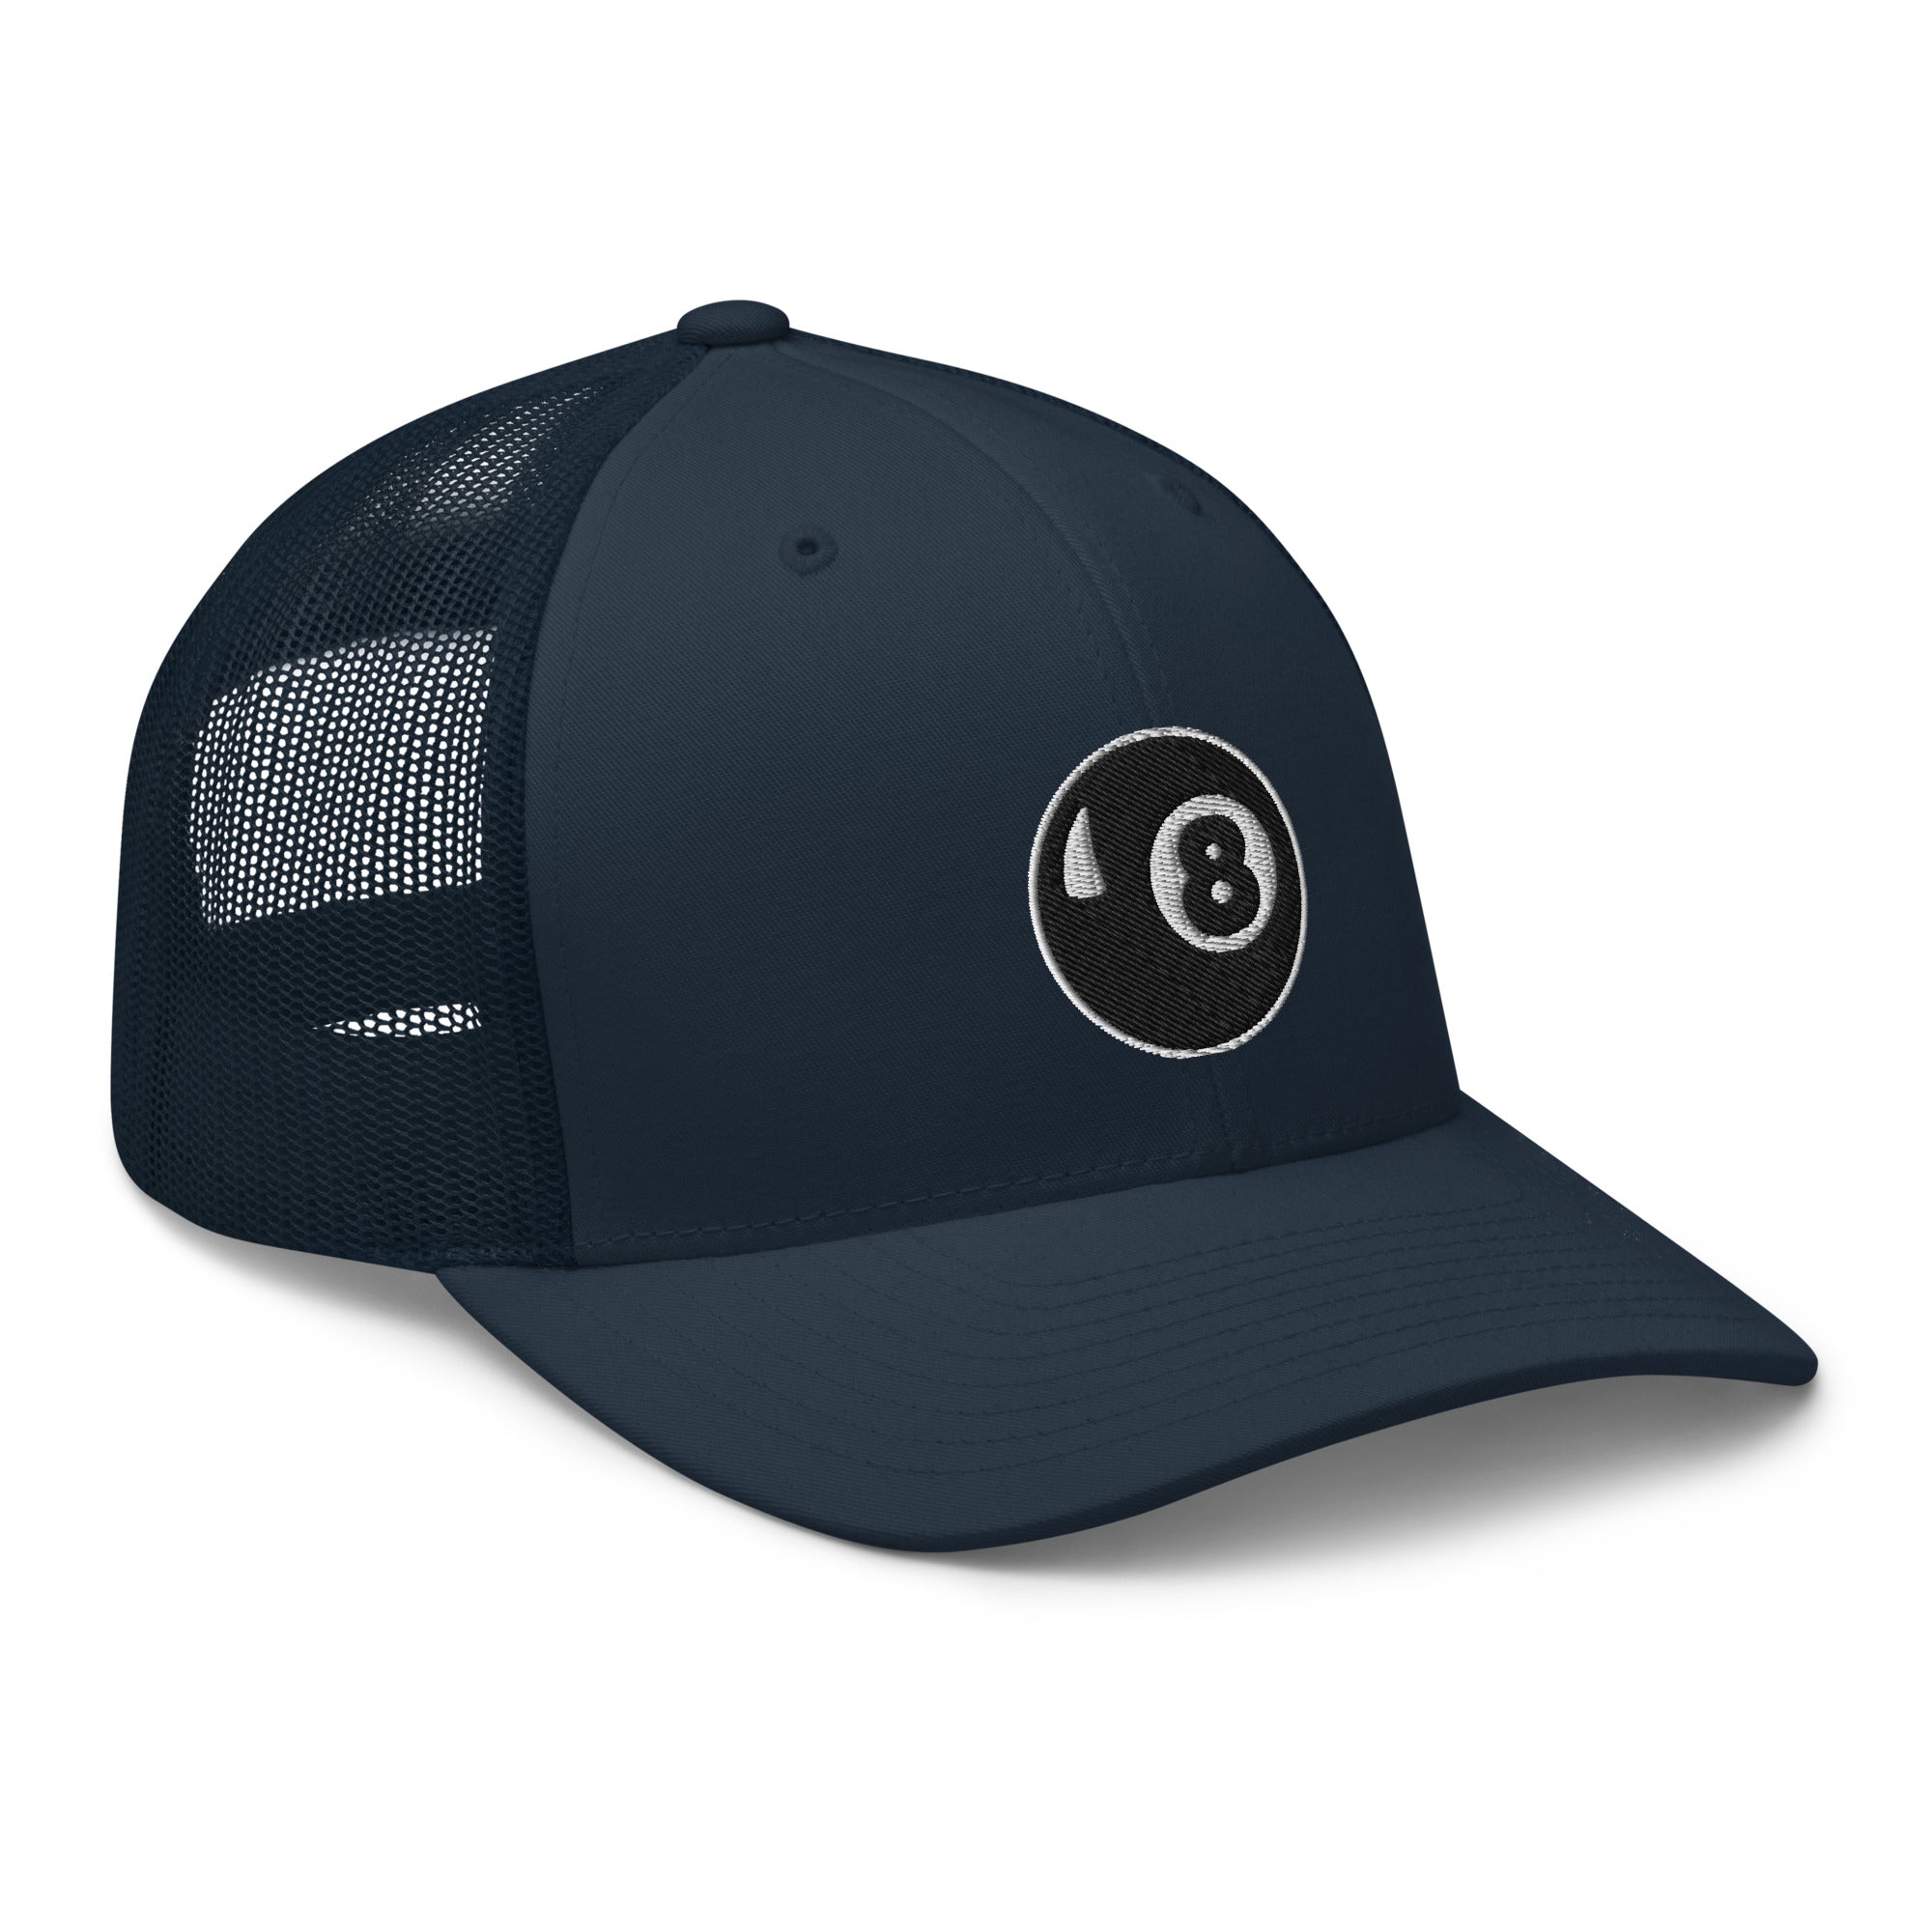 8 Ball Pool Billiards Embroidered Retro Trucker Cap Snapback Hat